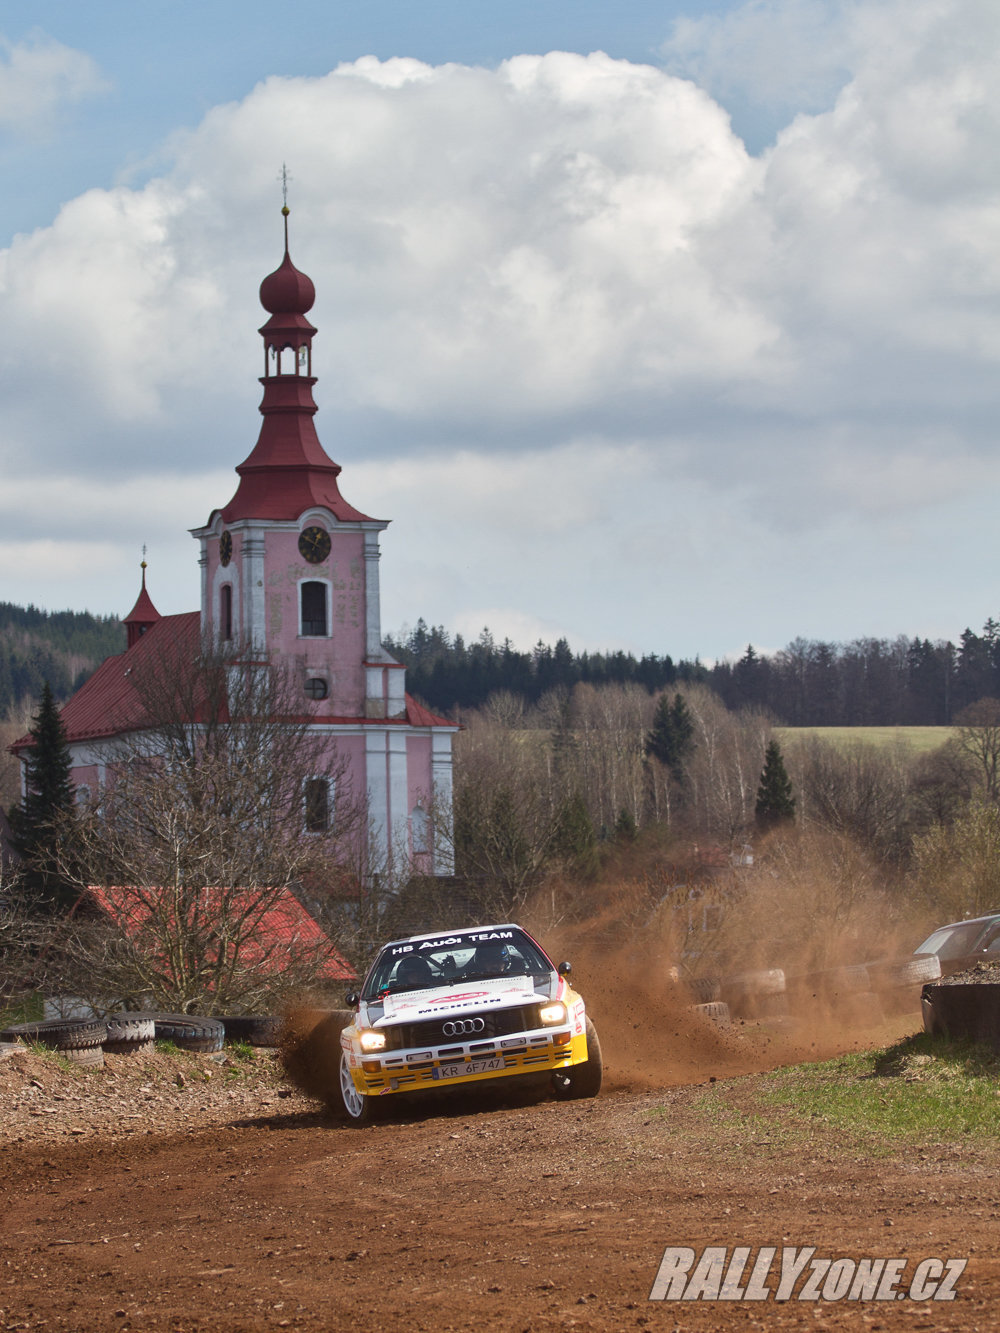 Rallye Prague Revival (CZE)